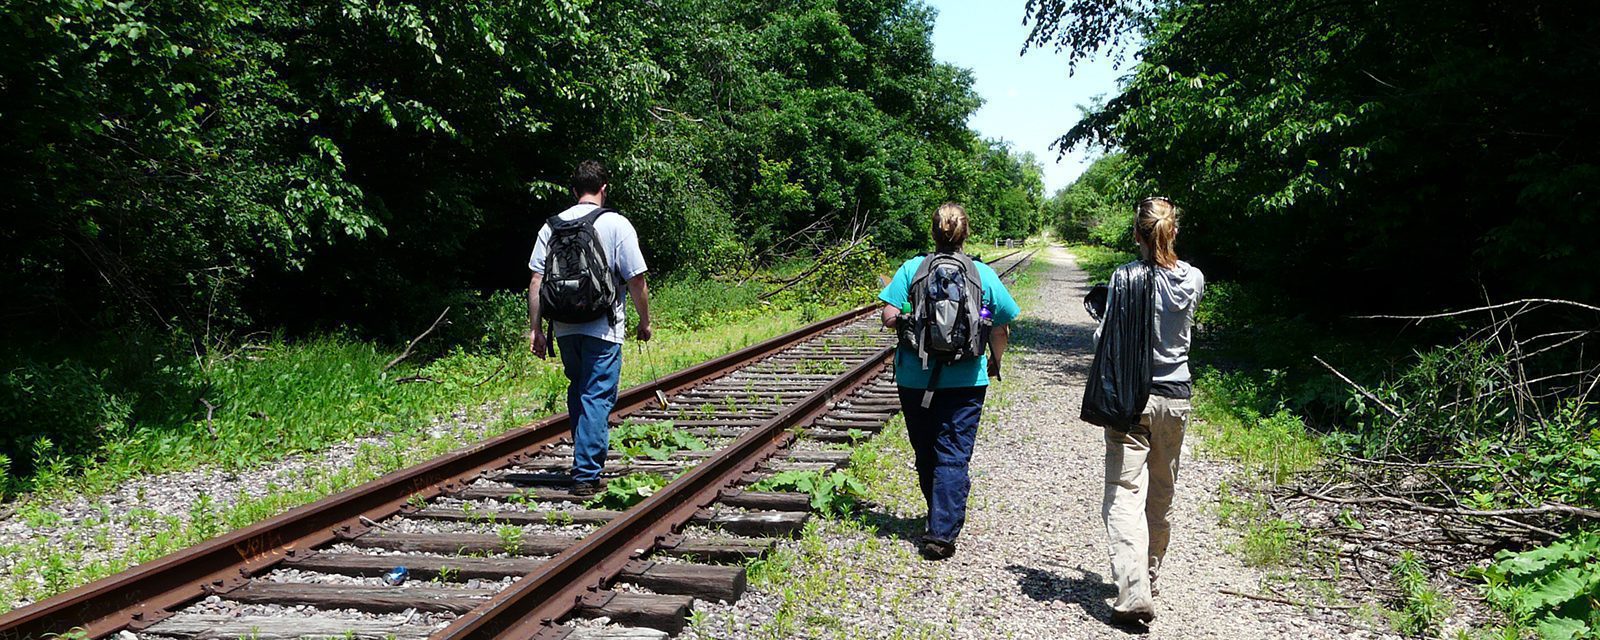 Zoo scientists following railroad tracks on foot